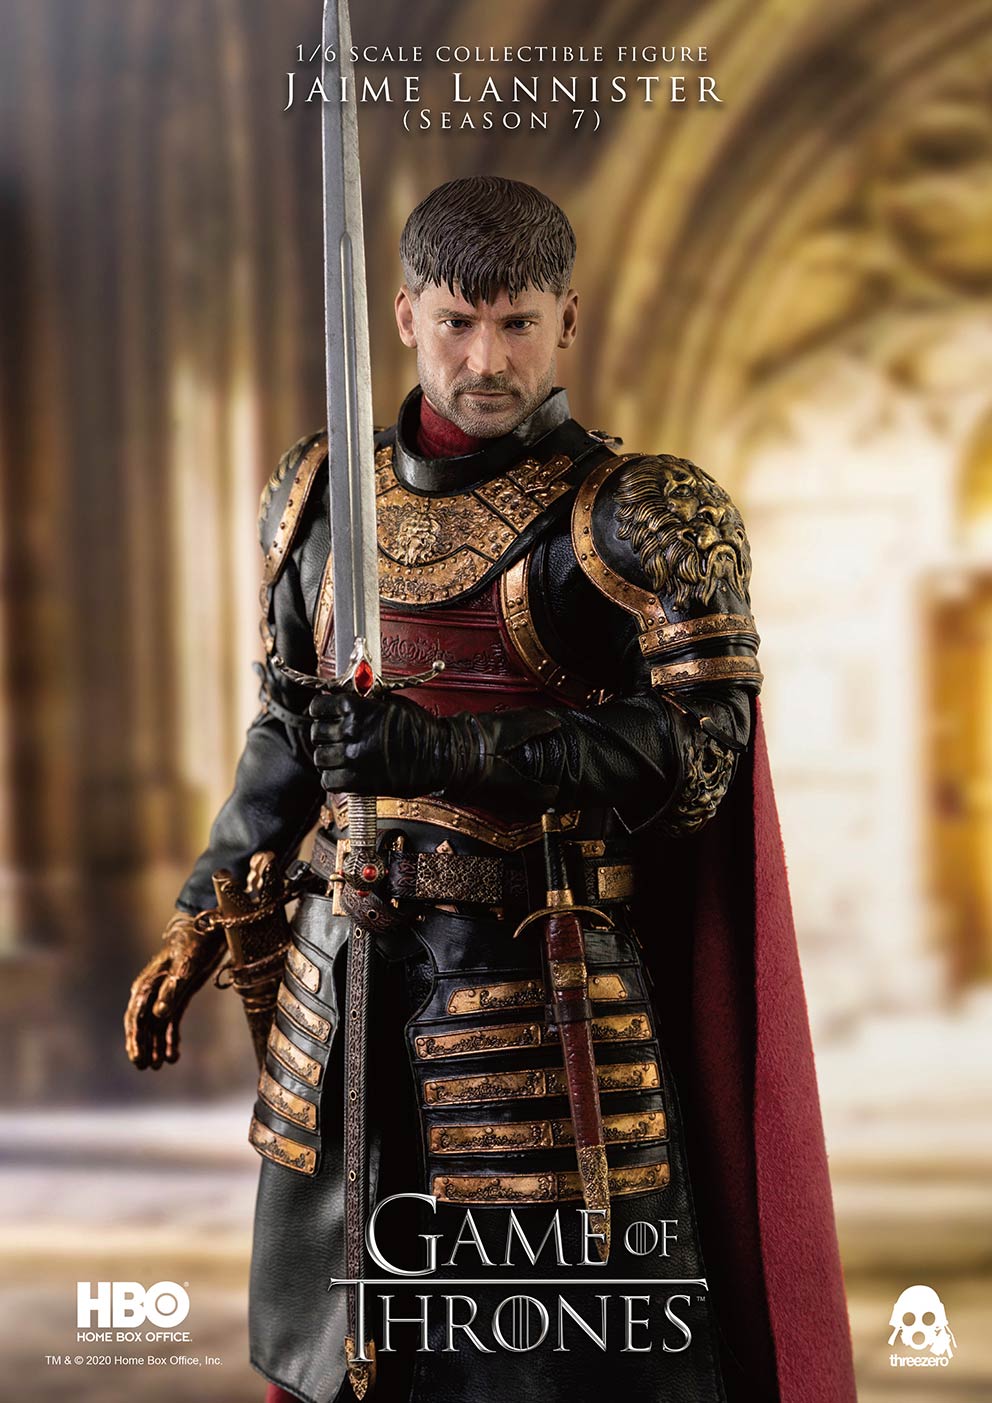 Armor - NEW PRODUCT: ThreeZero - "Game of Thrones" Season 7 - Kingslayer Jaime Lannister 0373